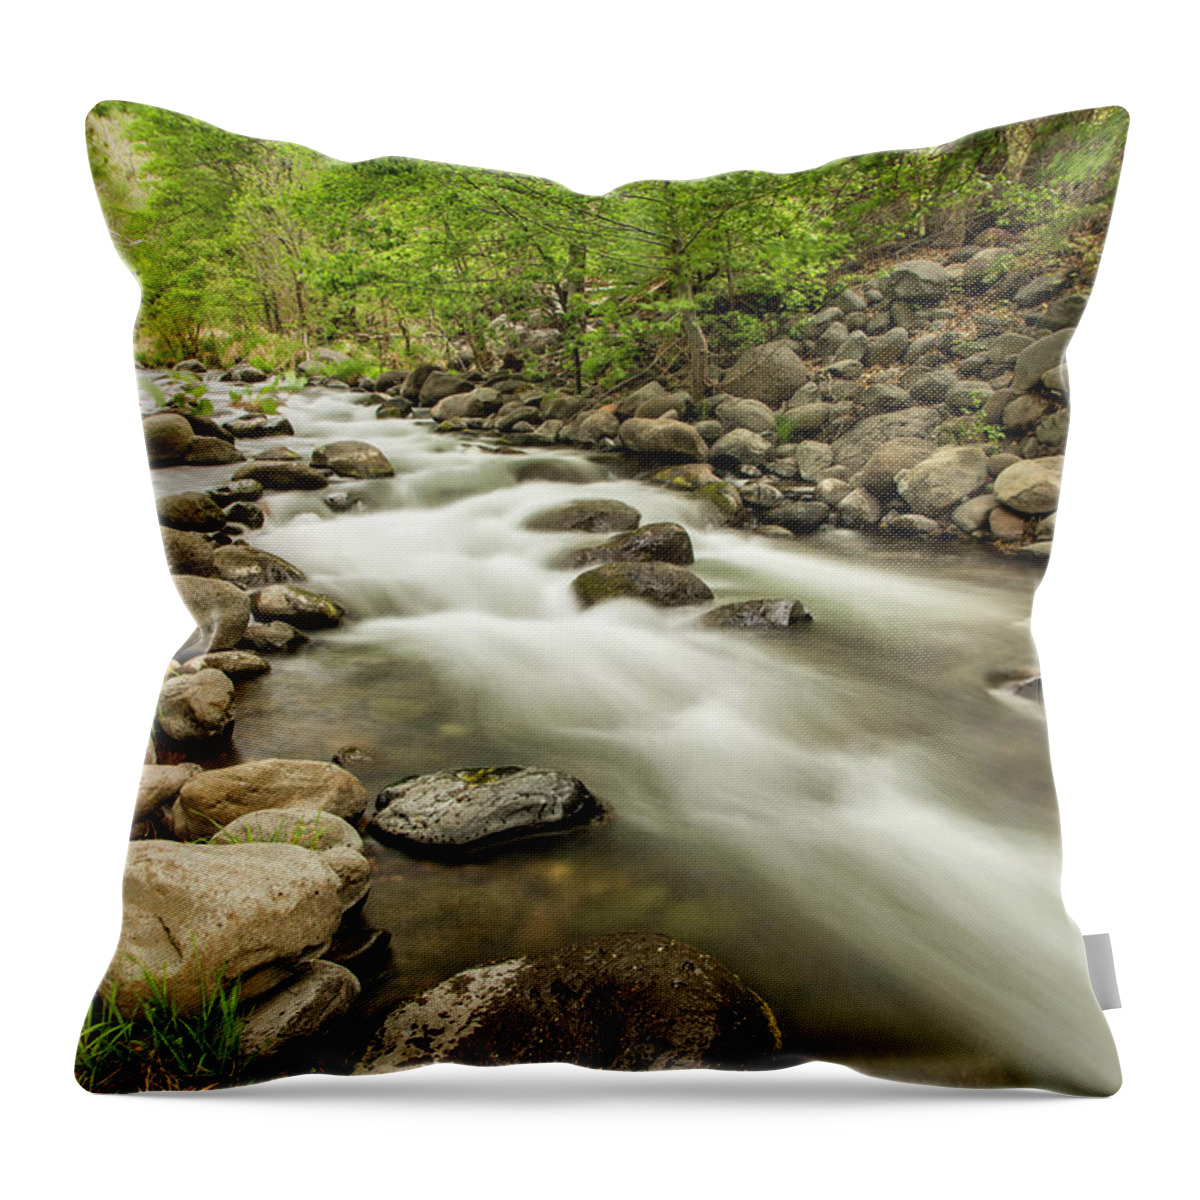 Oak Creek Throw Pillow featuring the photograph Rushing Waters Of Oak Creek by Jurgen Lorenzen